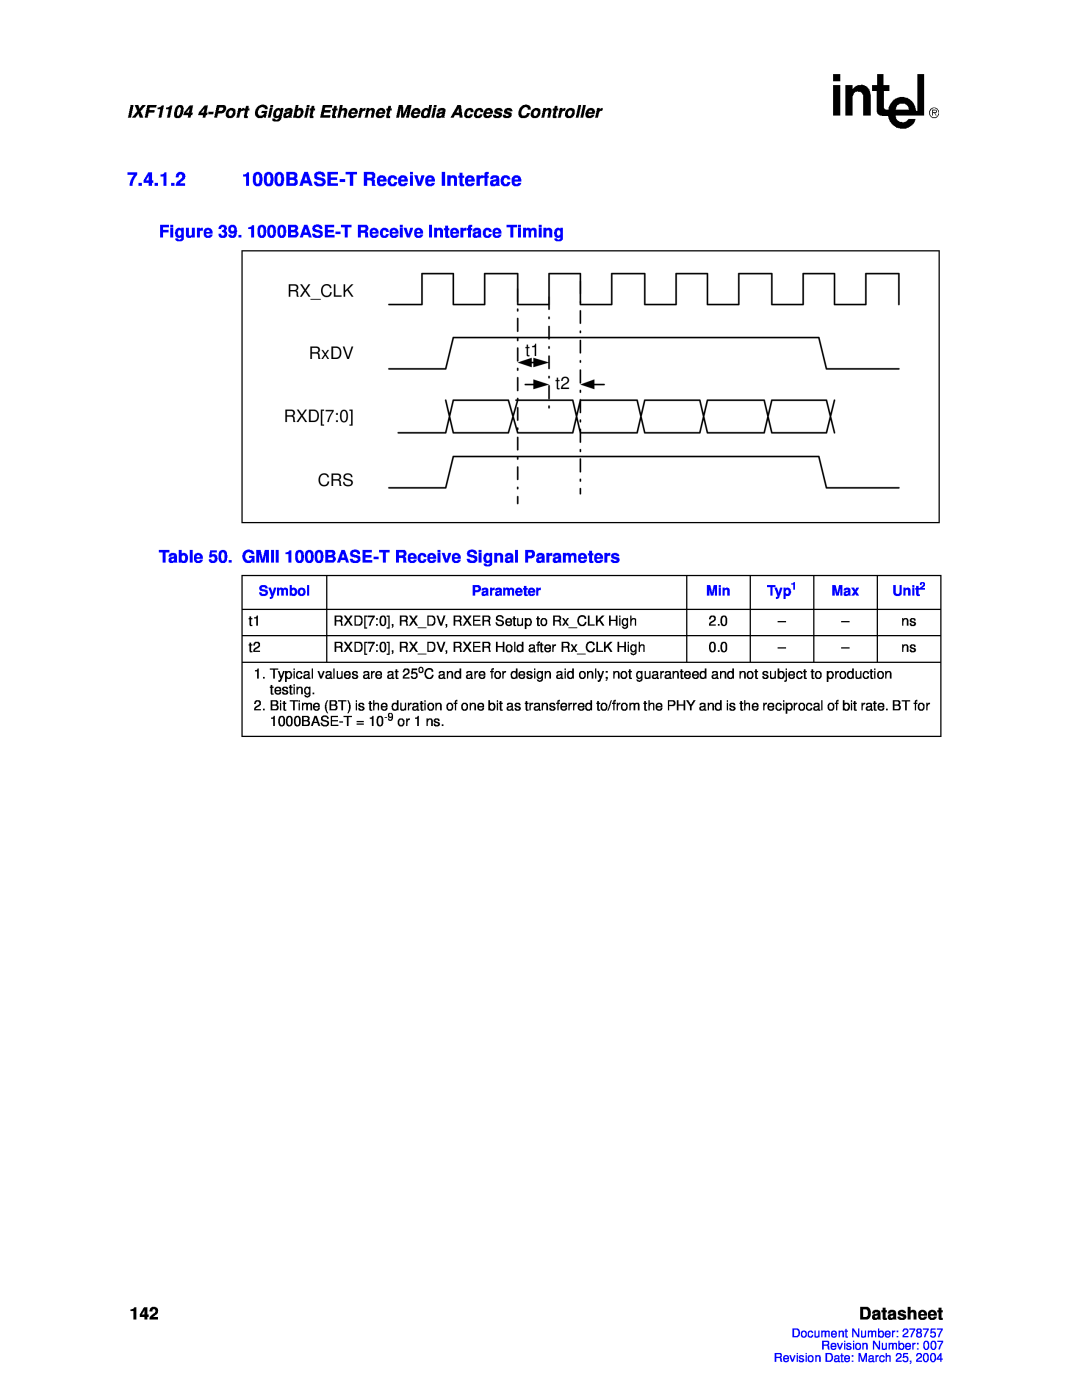 Intel IXF1104 manual 7.4.1.21000BASE-TReceive Interface, Datasheet 